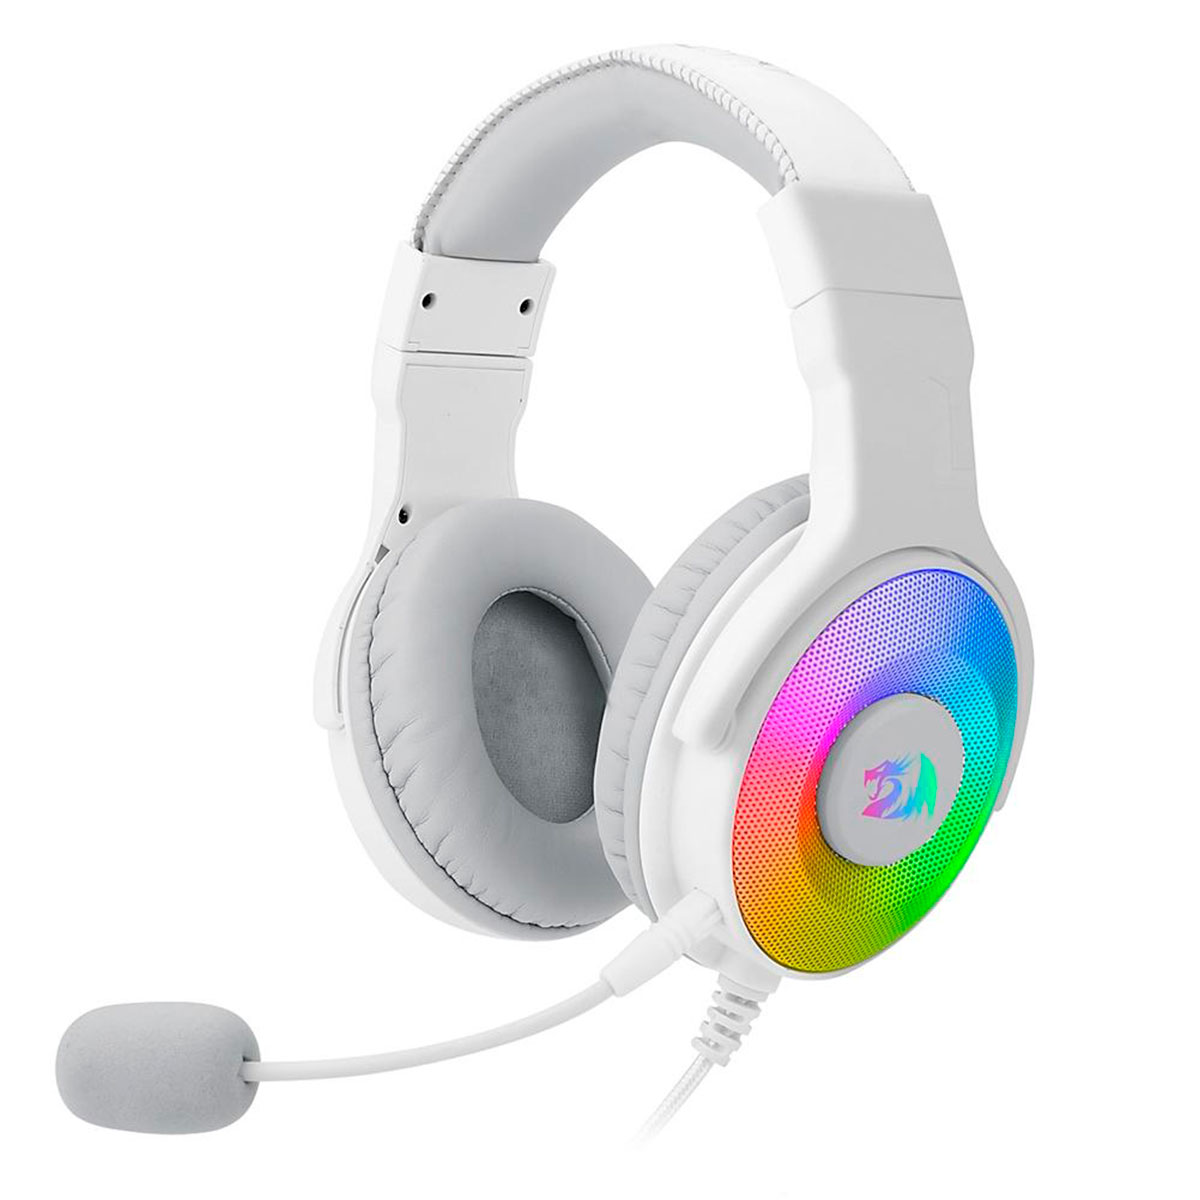 Headset Gamer Redragon Pandora Lunar White - LED RGB - Drivers 50mm - Conector USB - H350W-RGB